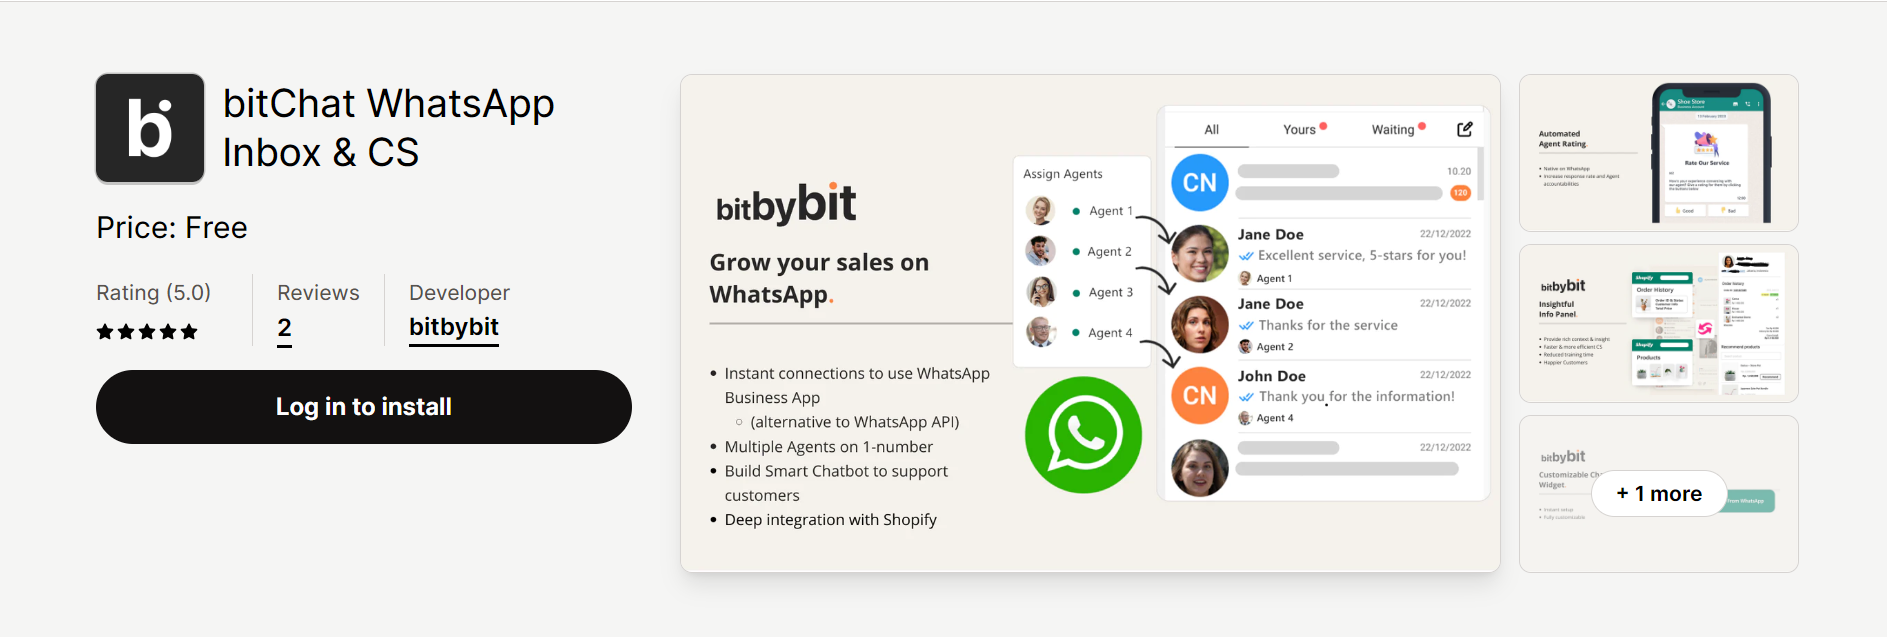 bitChat WhatsApp Inbox